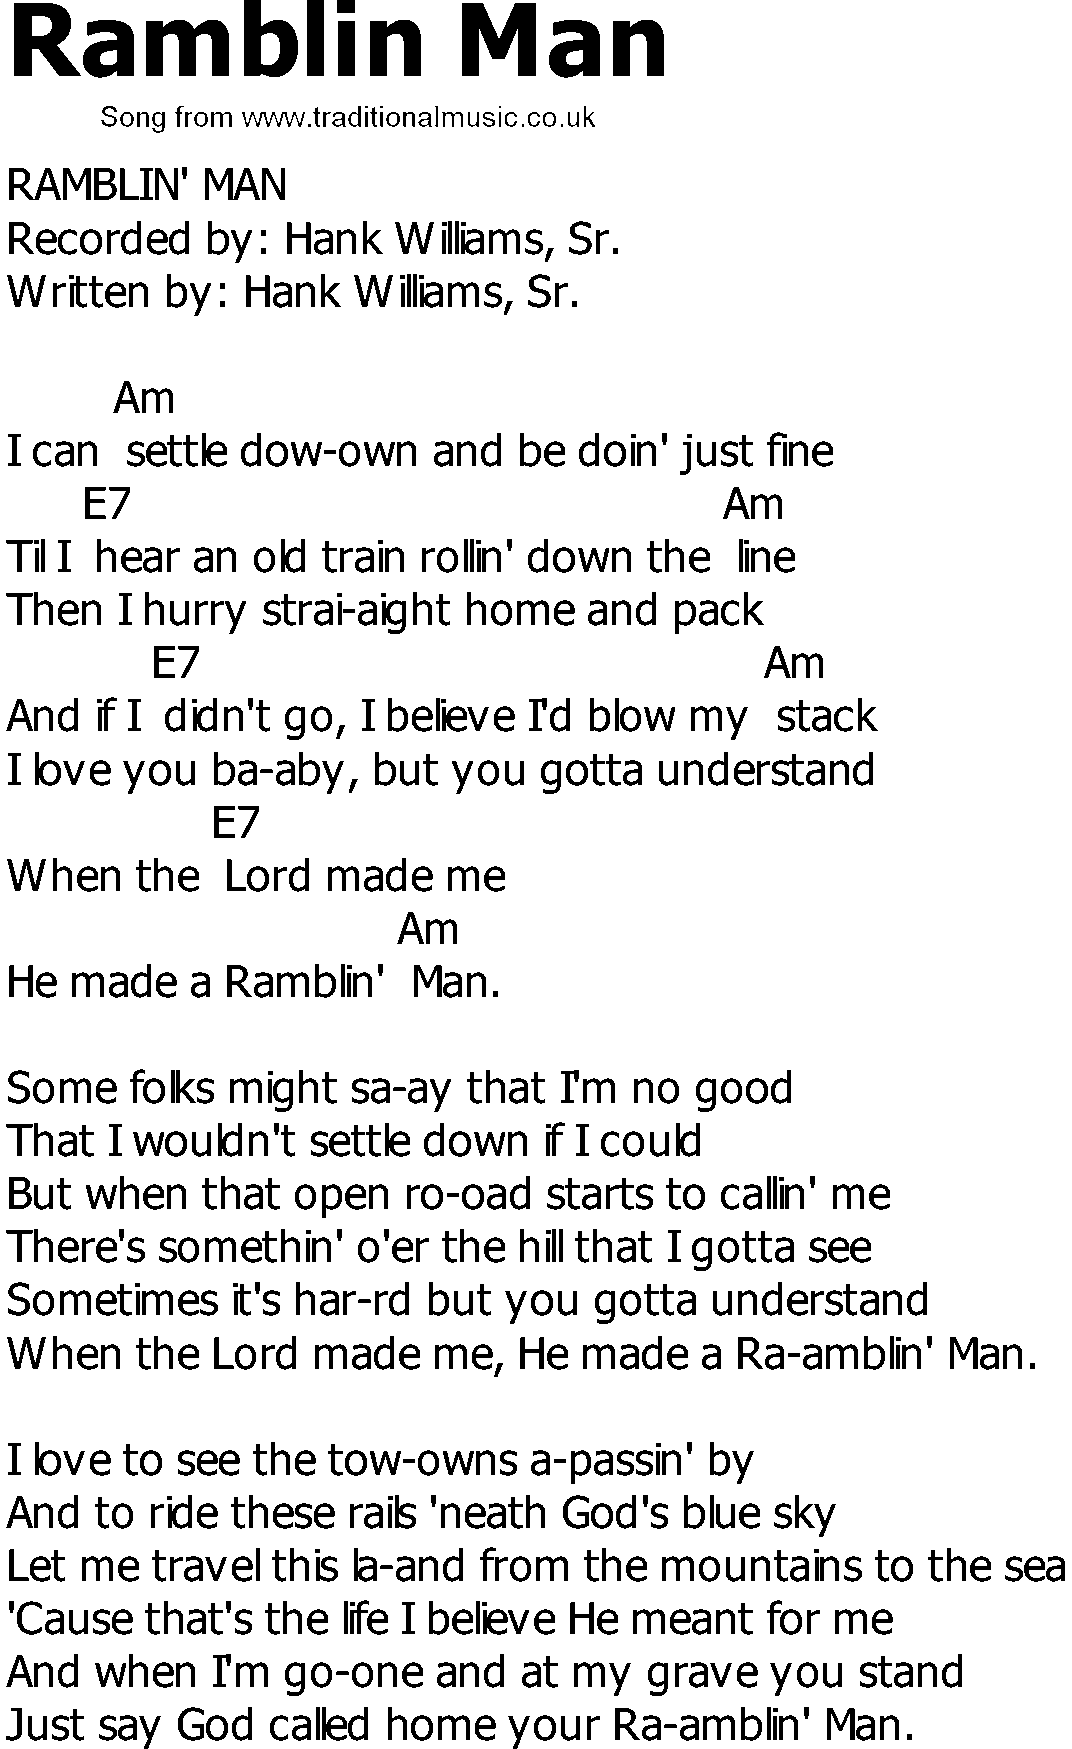 Old Country song lyrics with chords - Ramblin Man